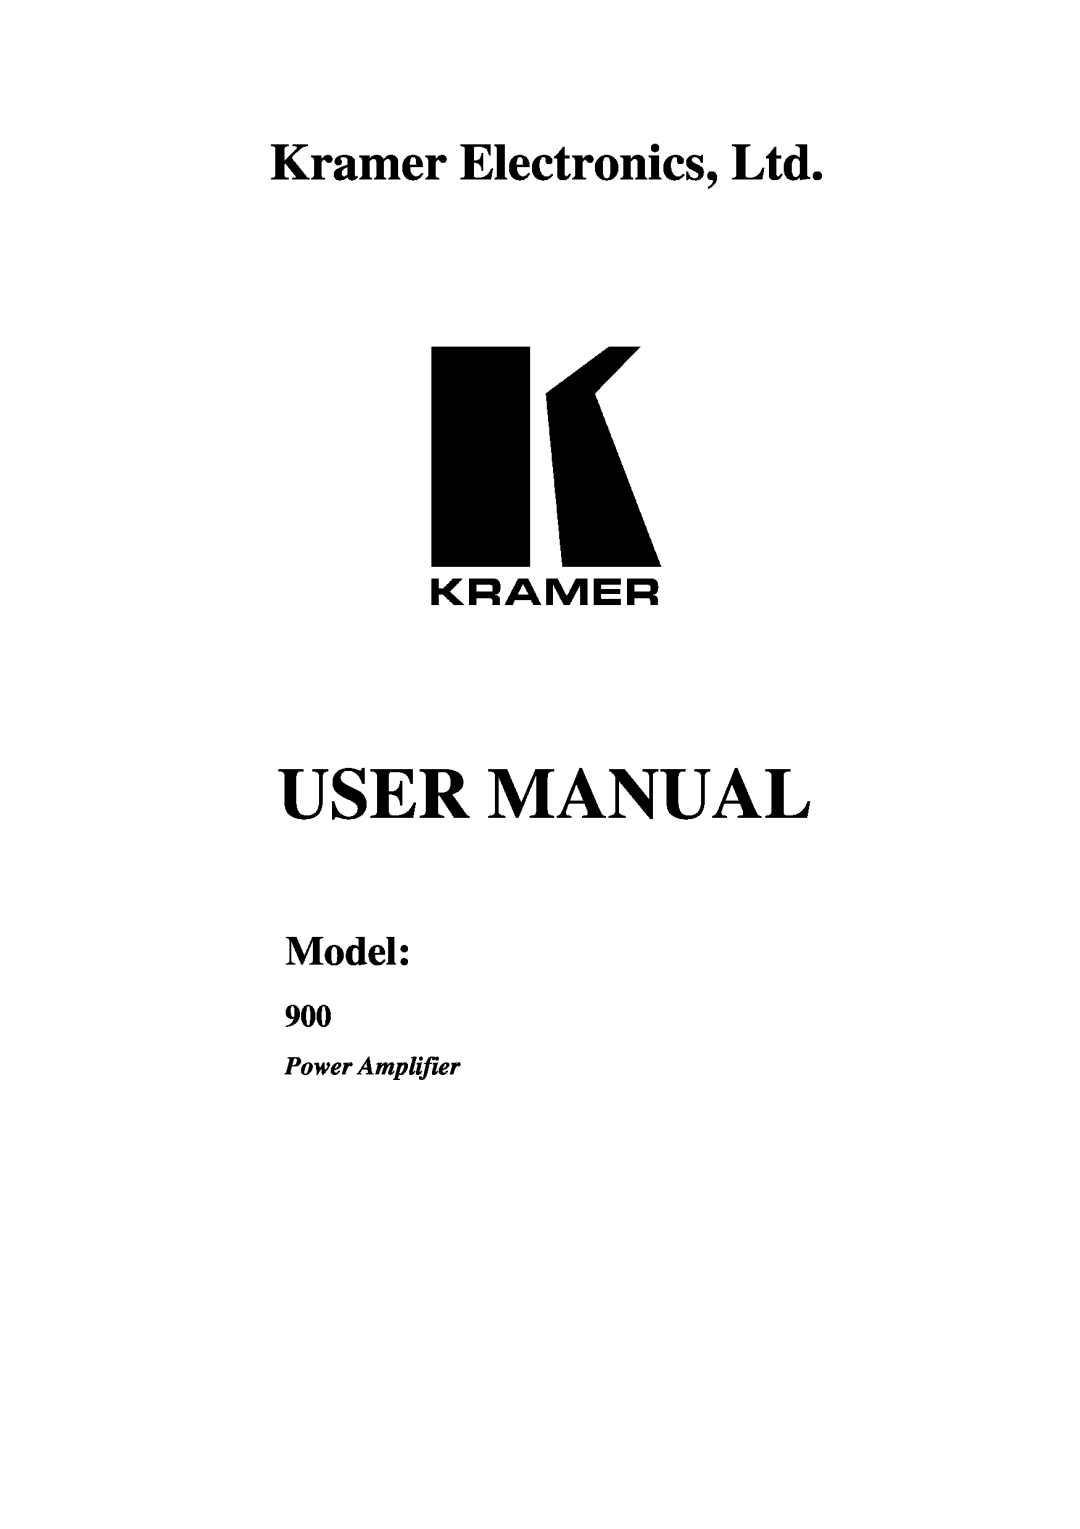 Kramer Electronics 900 user manual Model, Power Amplifier 